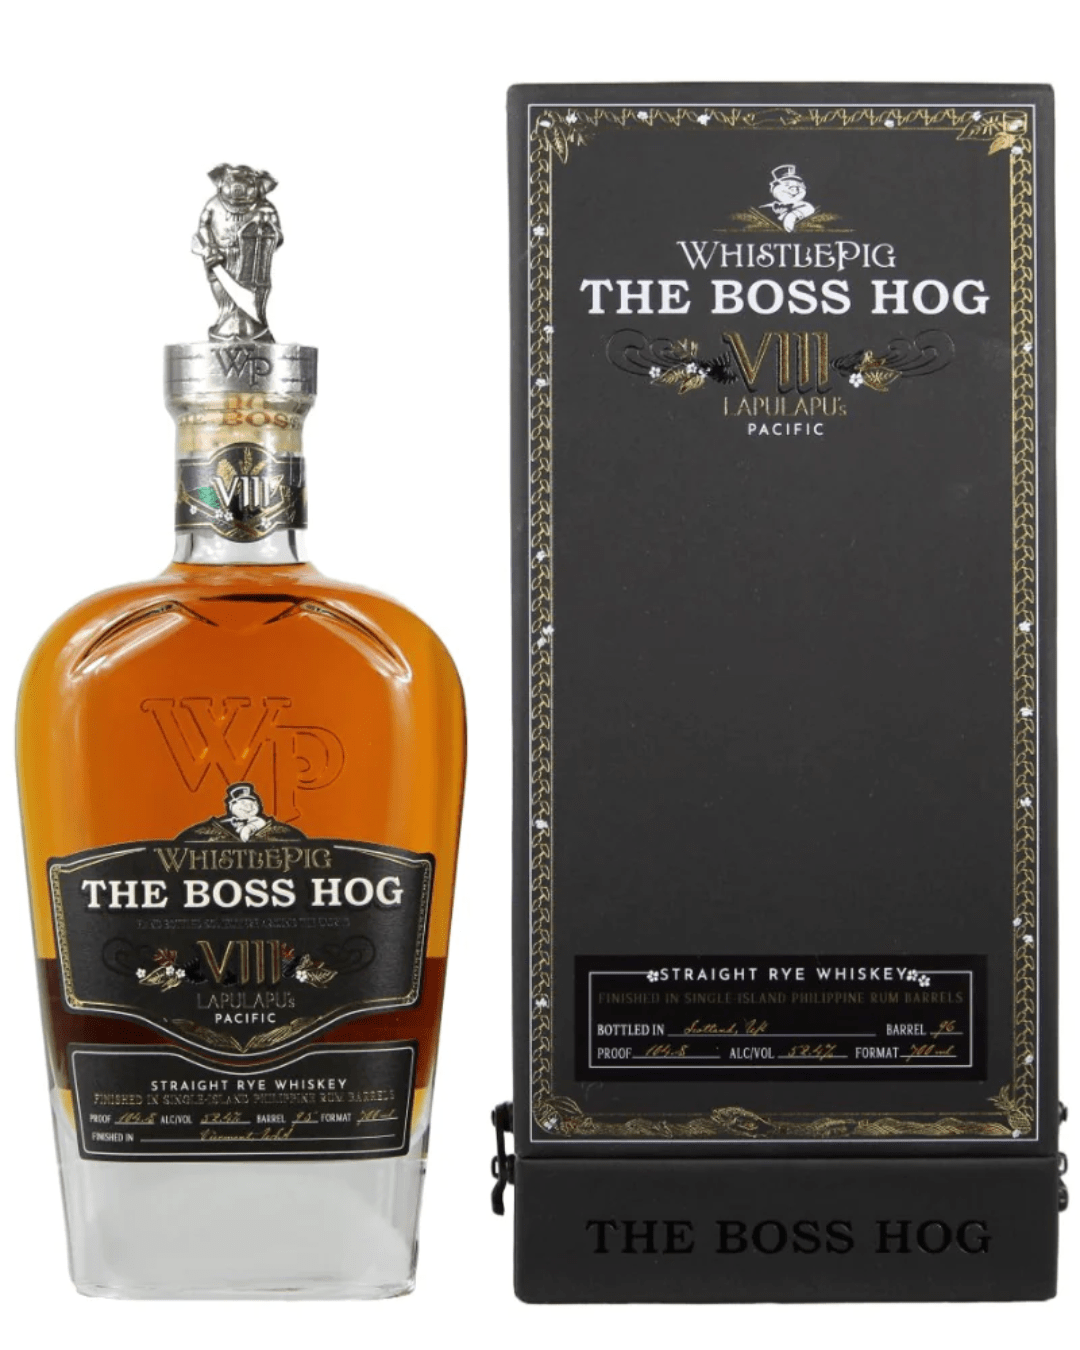 WhistlePig The Boss Hog VIII Straight Rye Whiskey, 70 cl Spirits